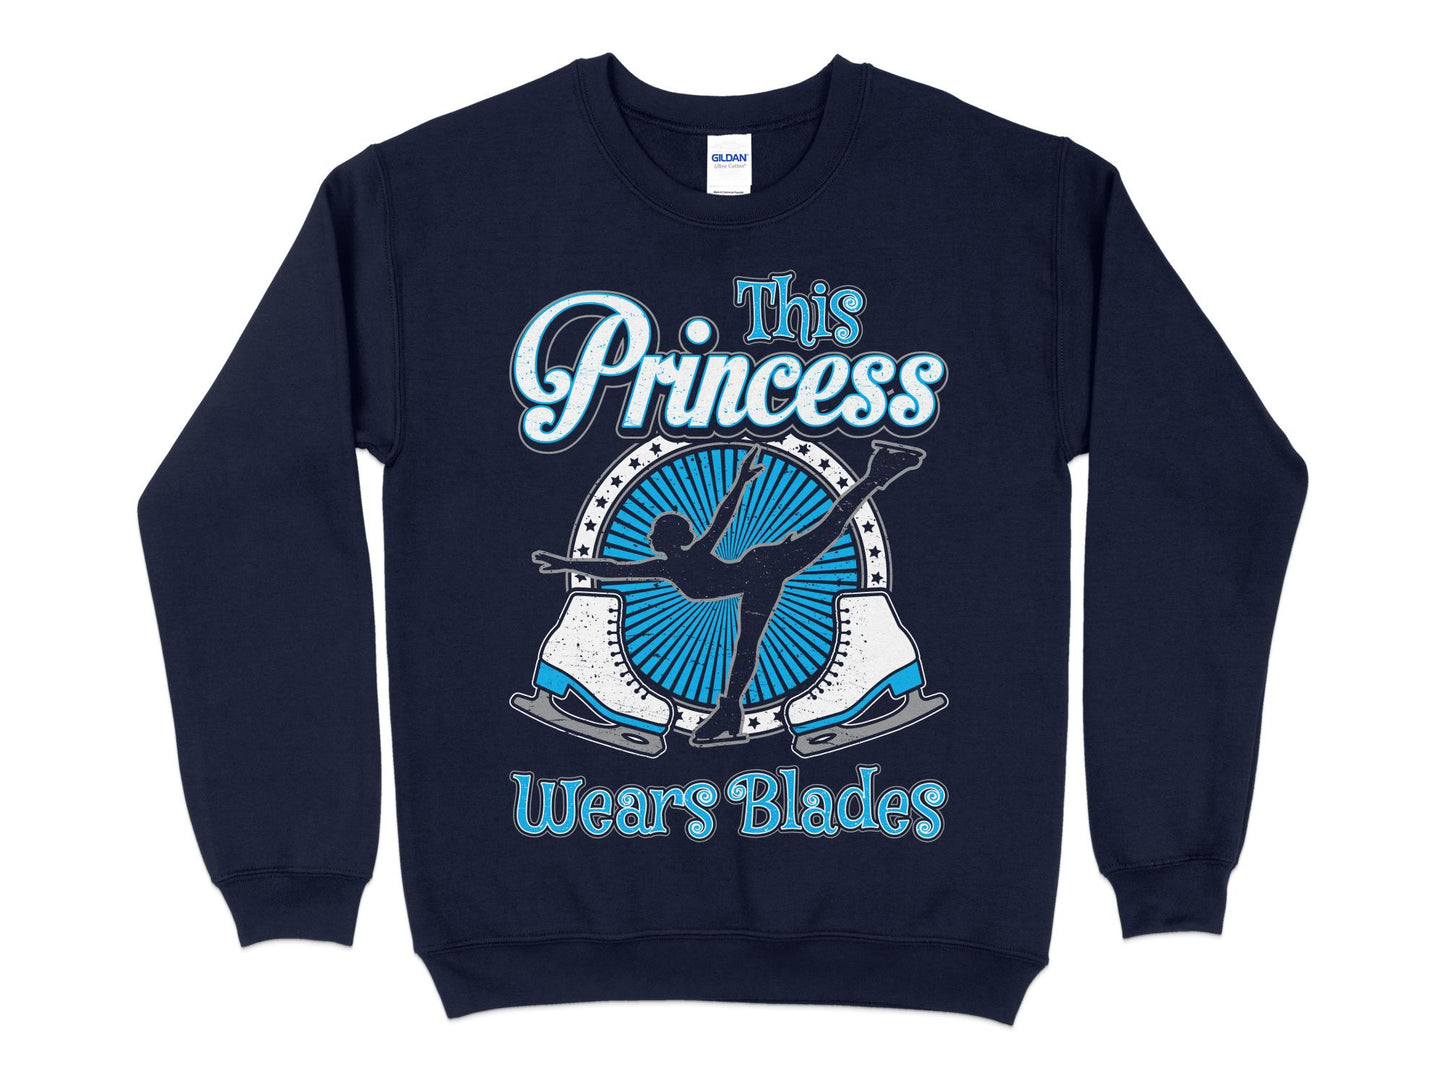 Figure Skating Sweatshirt This Princess Wears Blades, navy blue